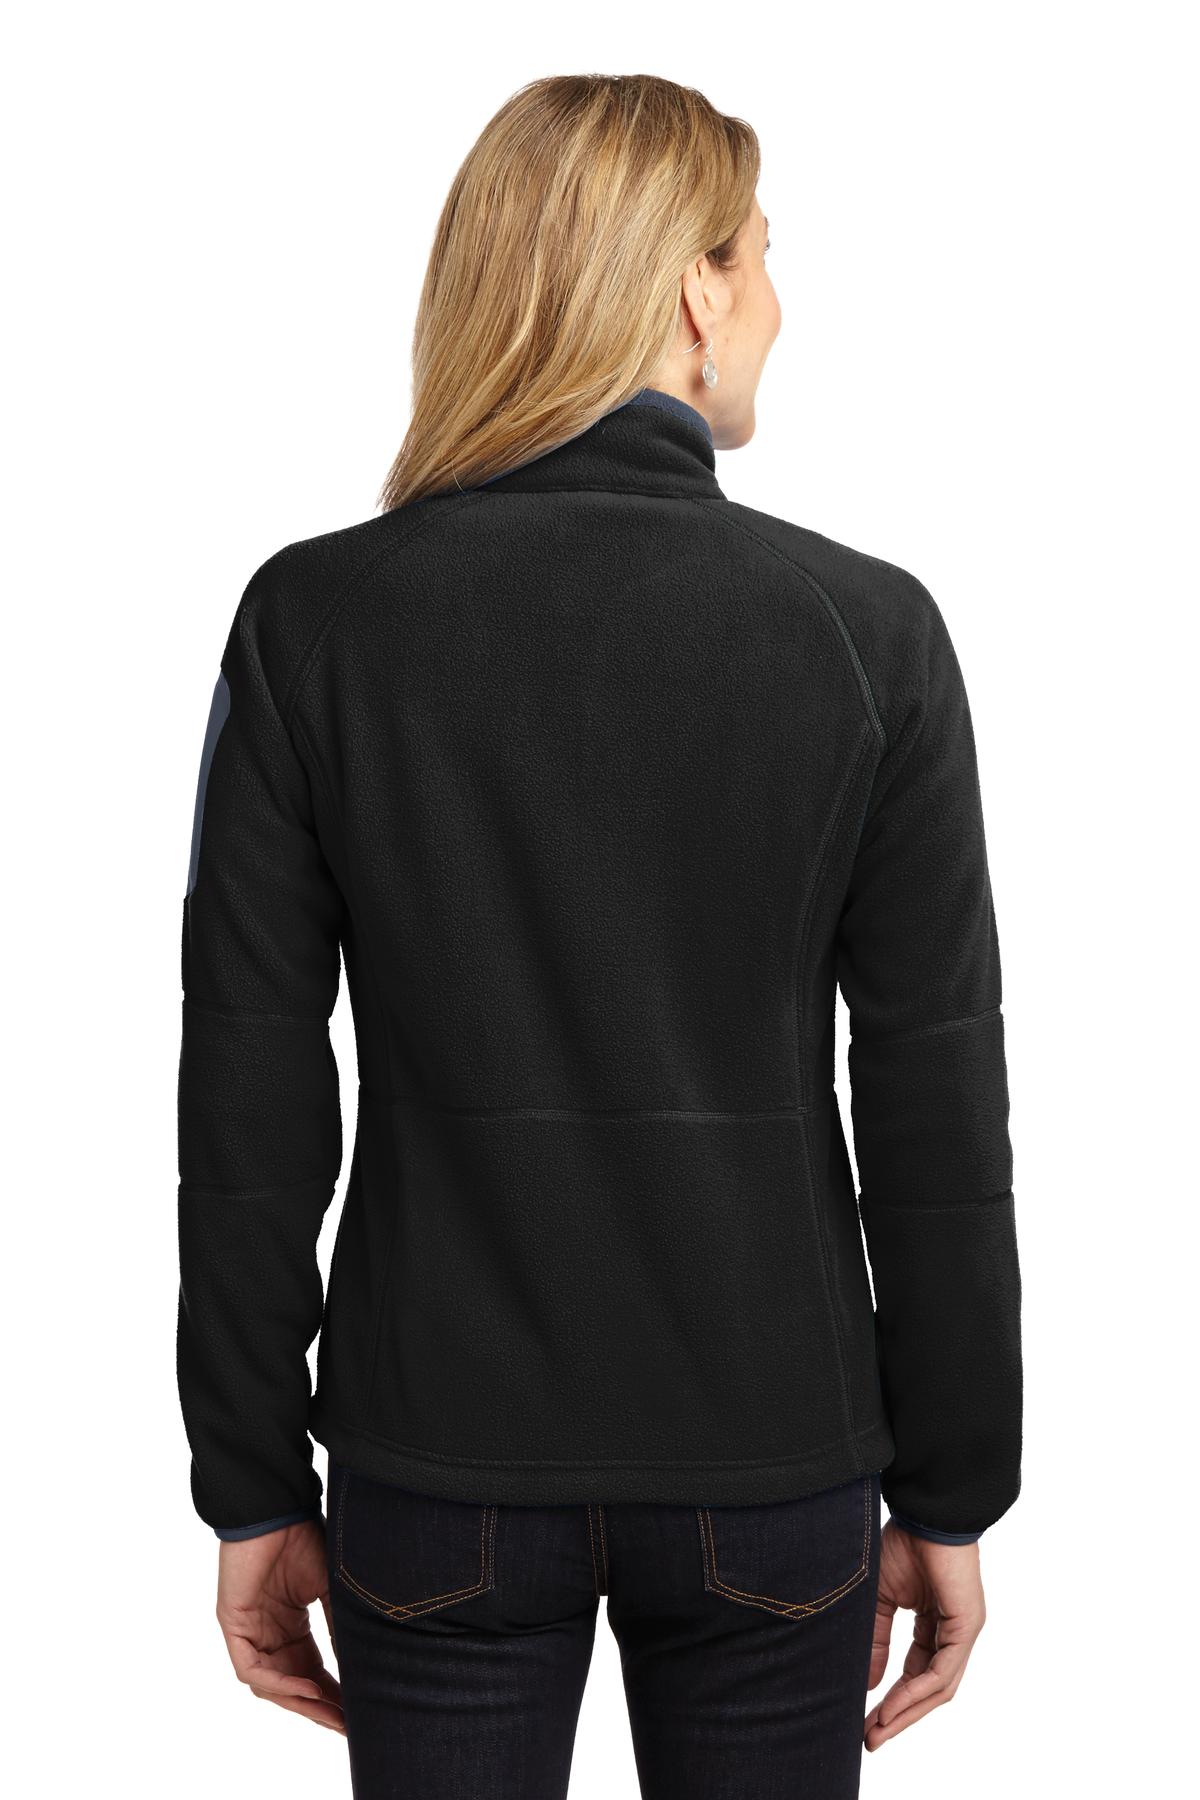 Enhanced Value Fleece FullZip Jacket - image 2 of 2